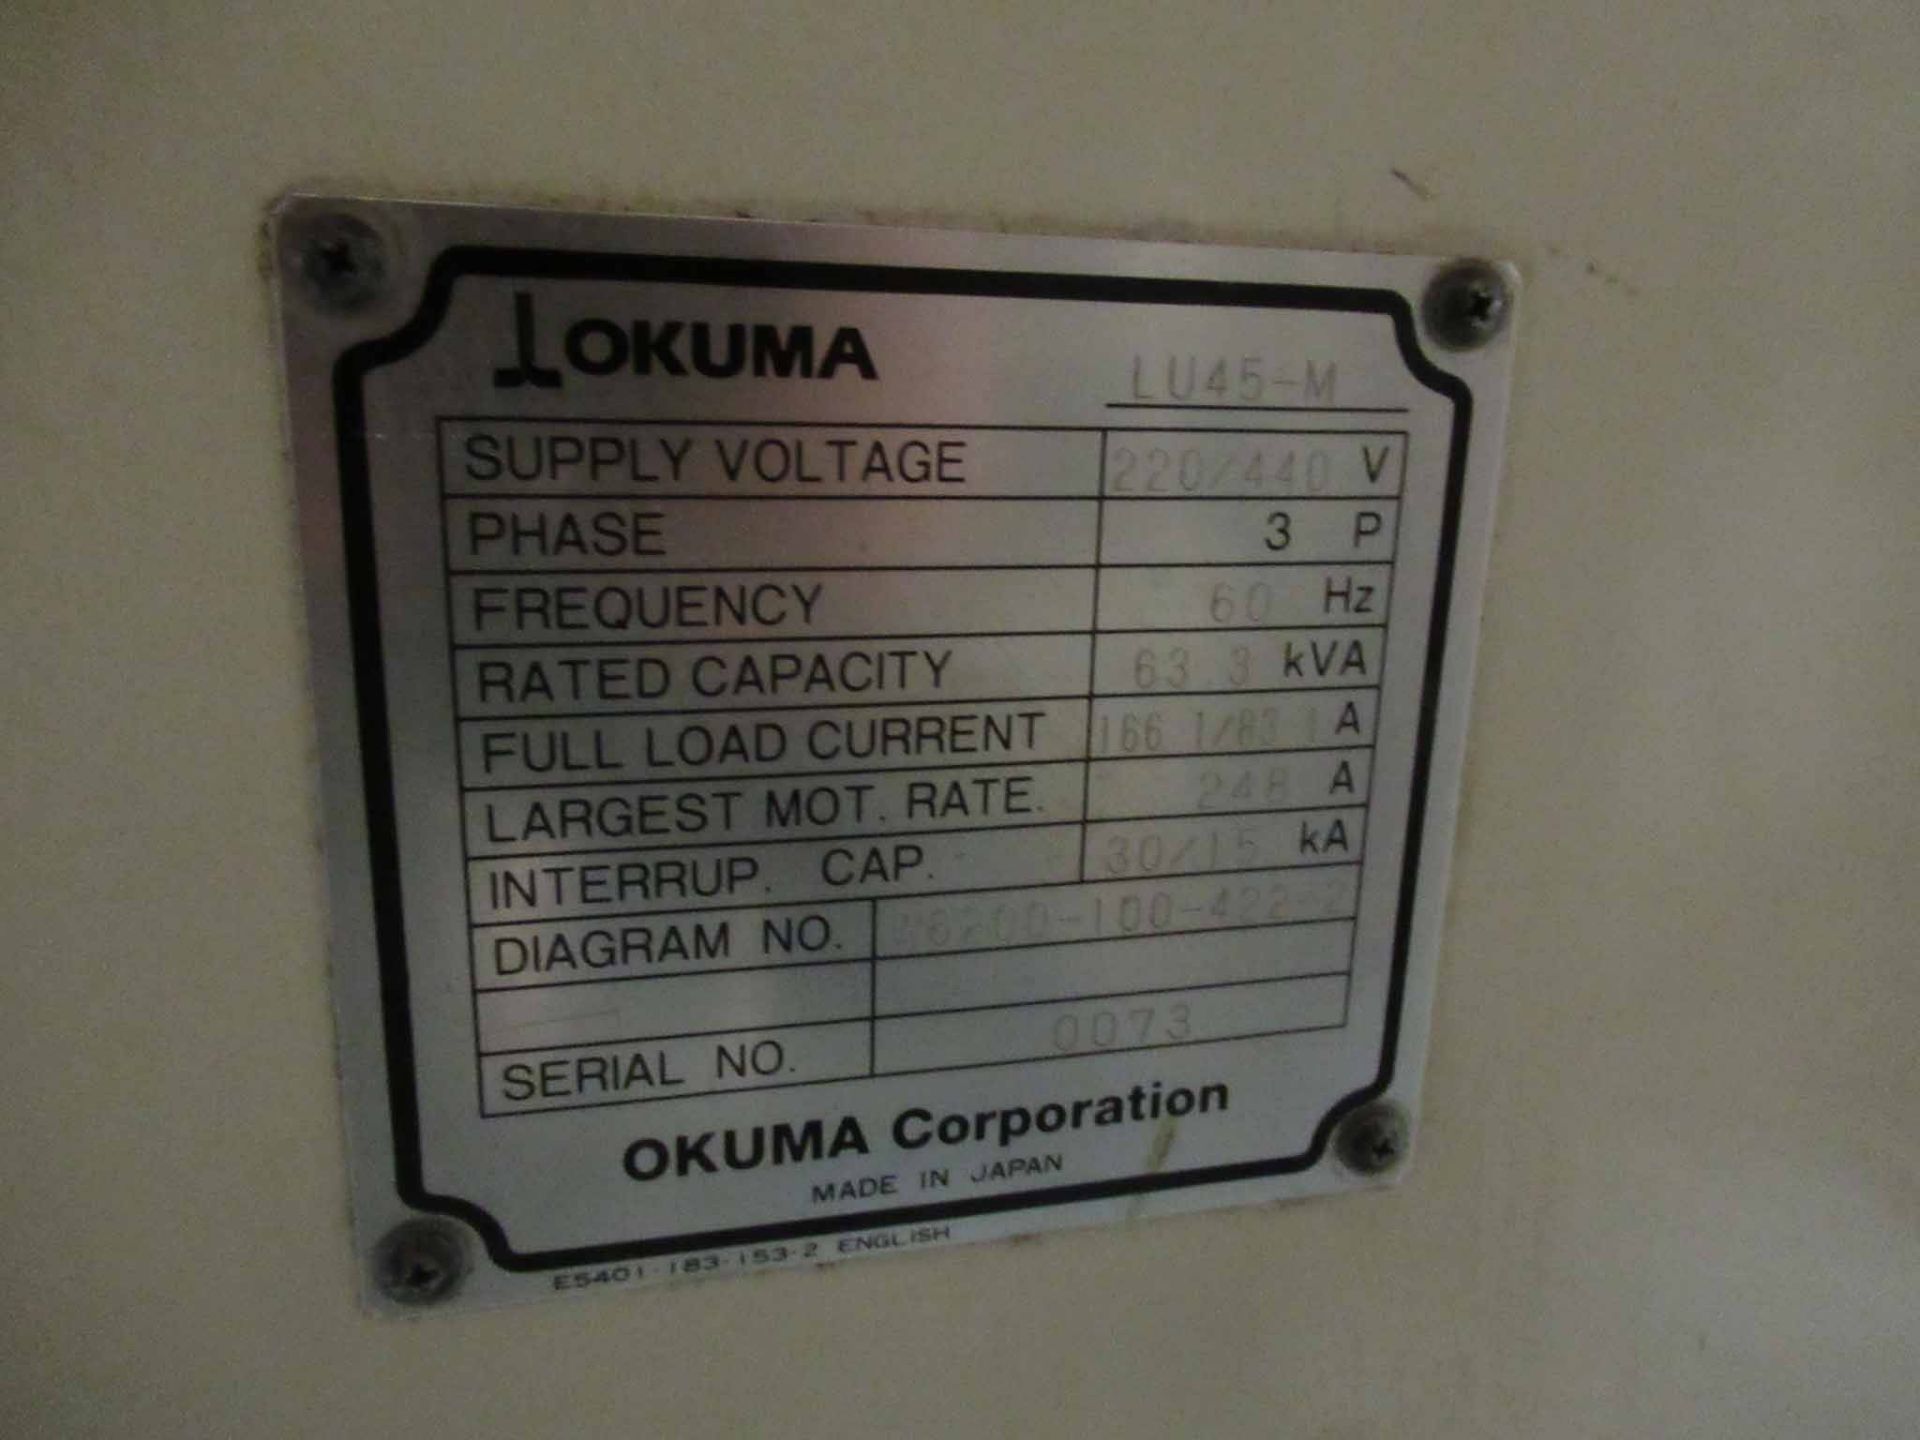 OKUMA Impact LU45M CNC LATHE 4-axis CNC lathe, OSP7000L CNC control, 33.07” max. swing over bed, - Image 9 of 9